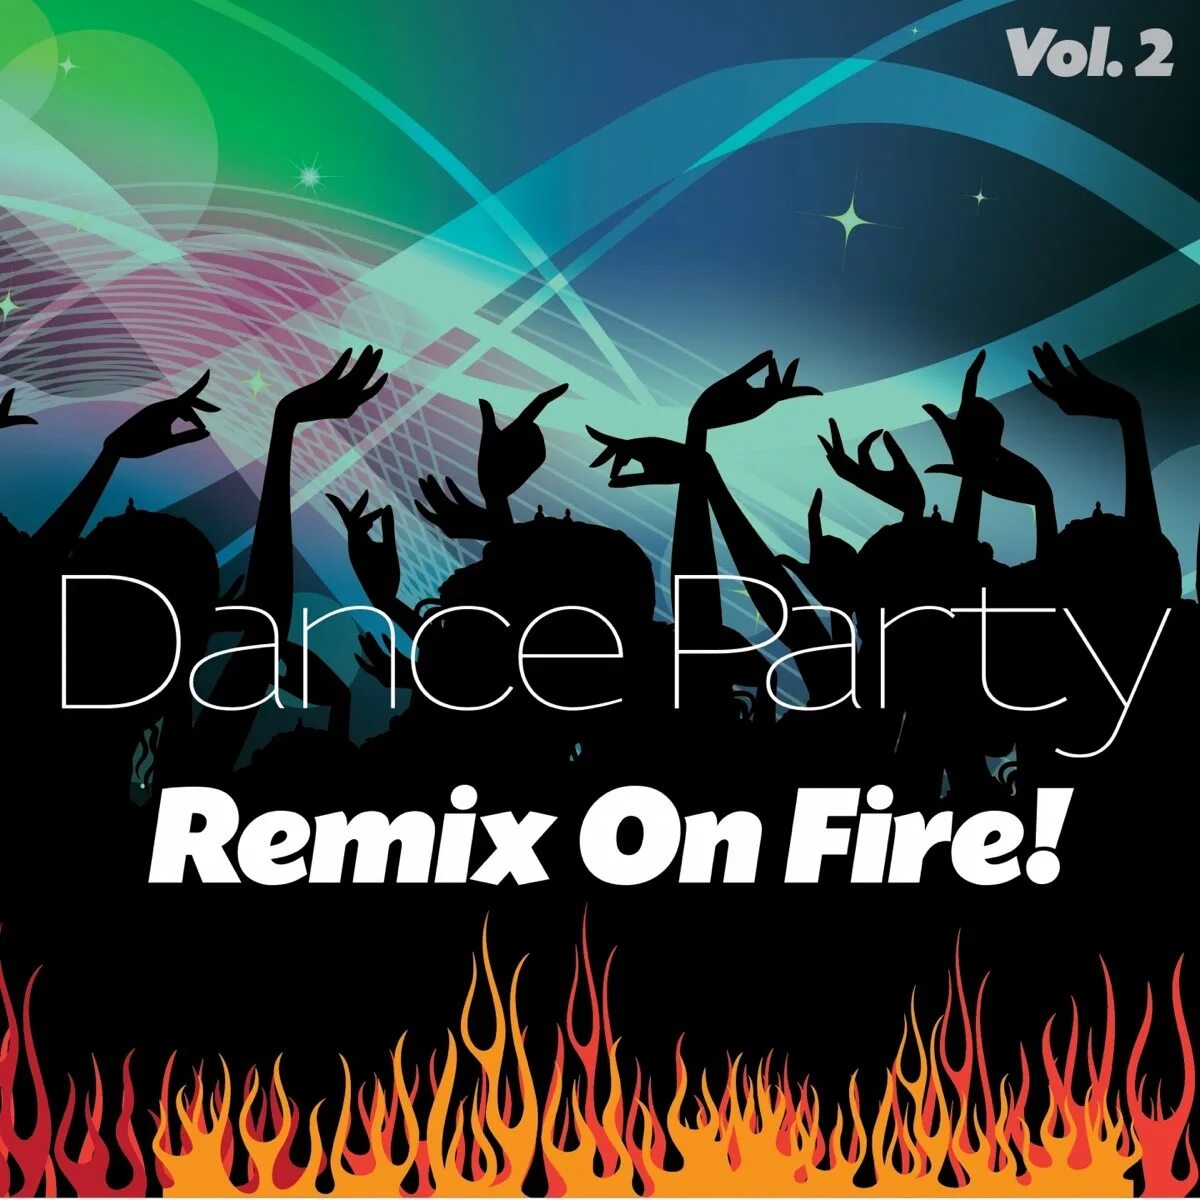 Dance remix 2. Надпись ремикс. Remix картинки. Обложка для ремикса. Remix логотип.